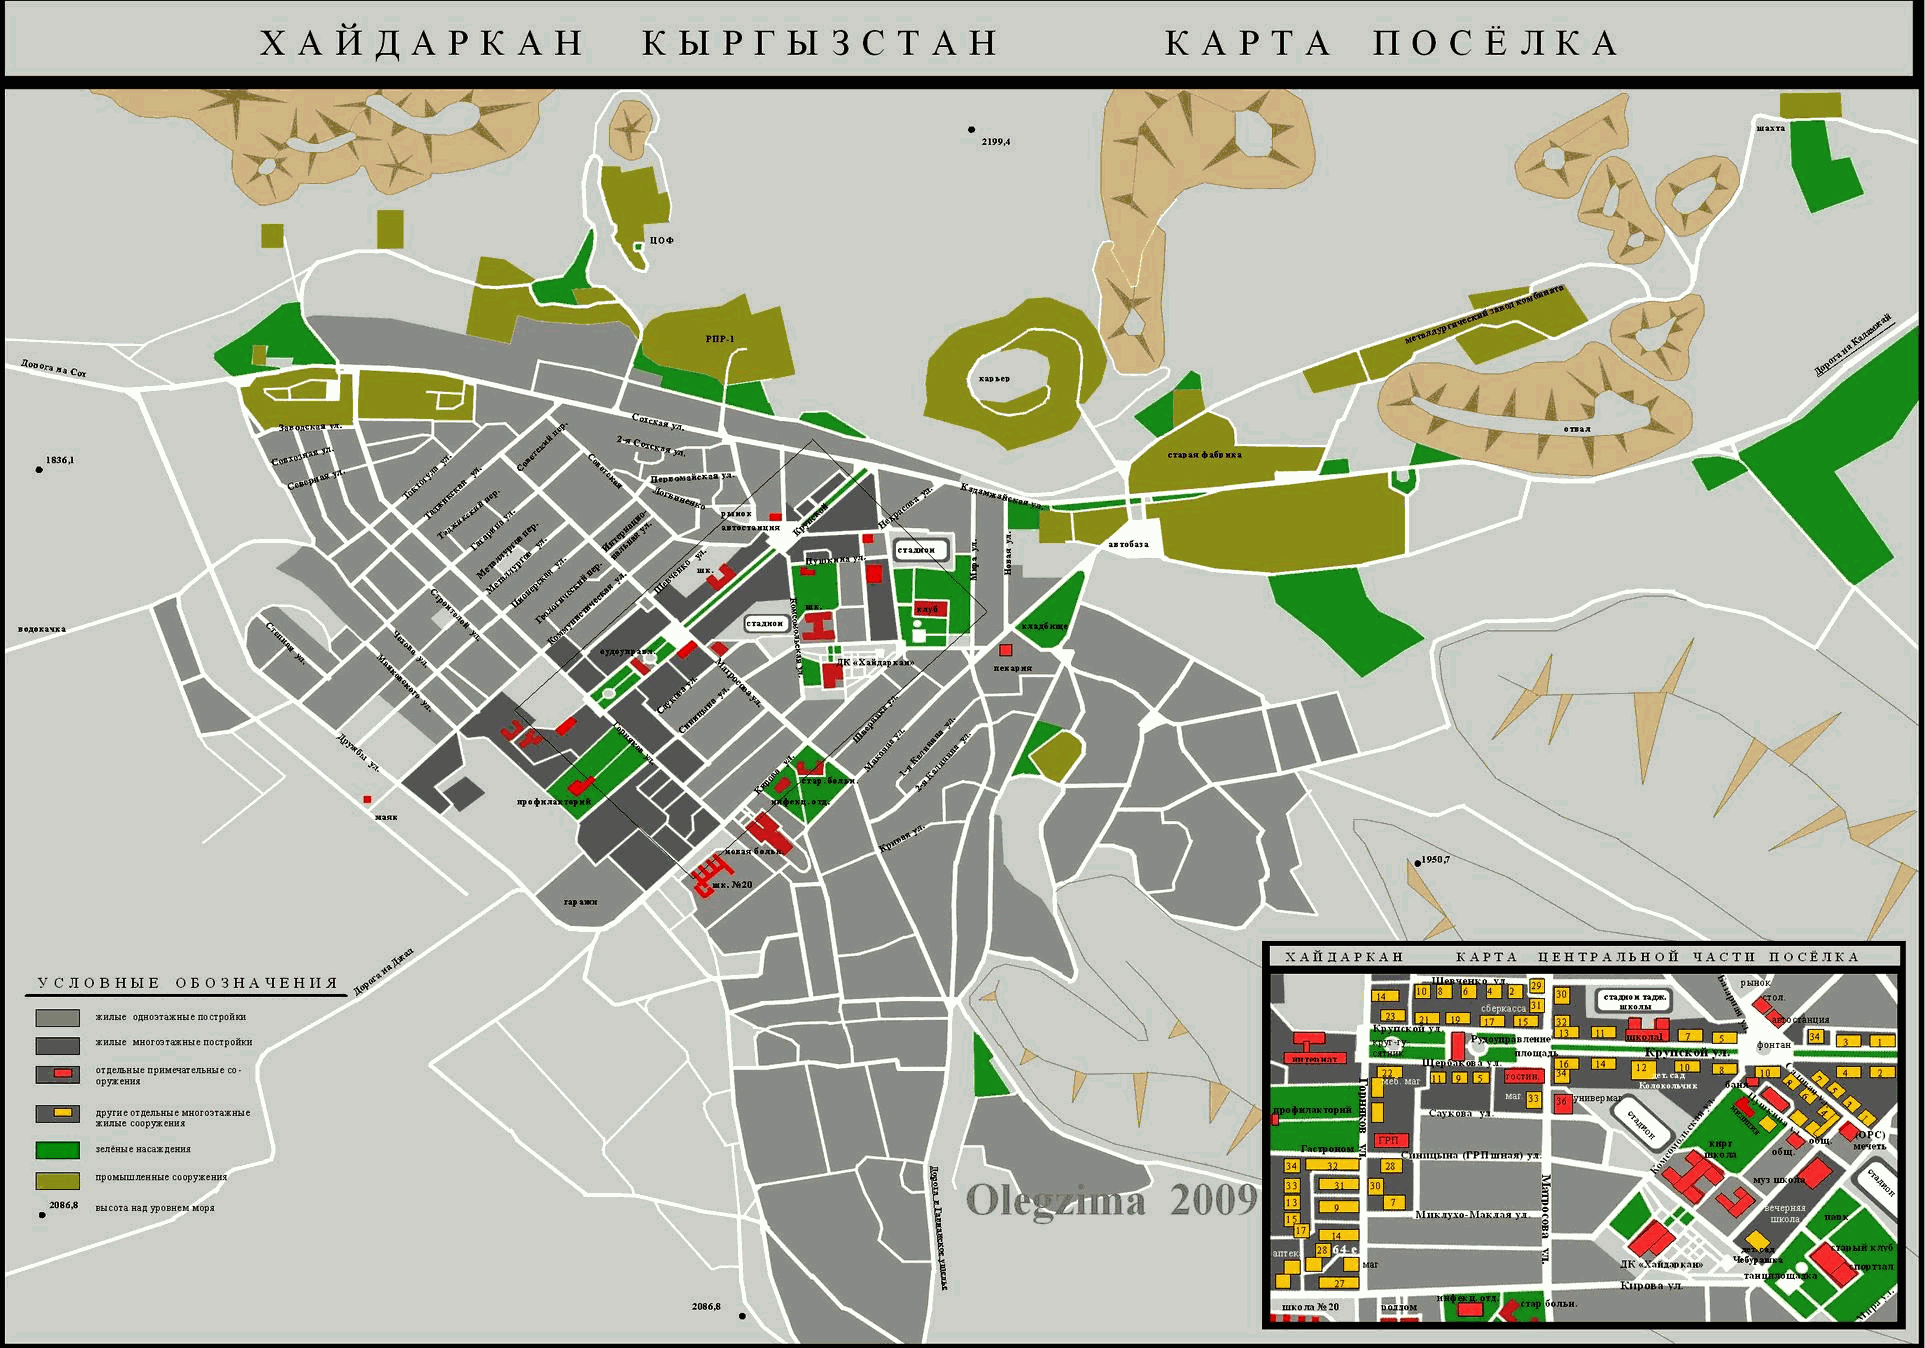 Карта поселка Хайдаркан с наименованиями улиц до 1991 года